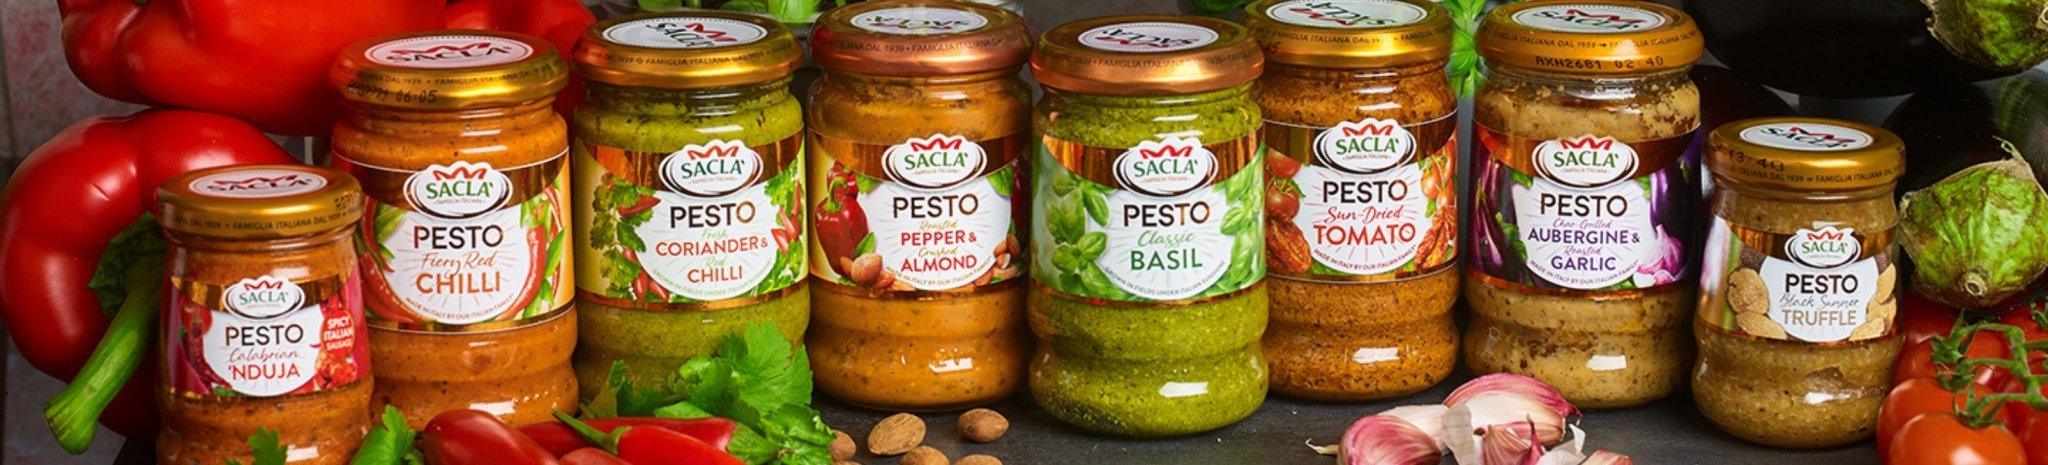 Pesto - Sacla'